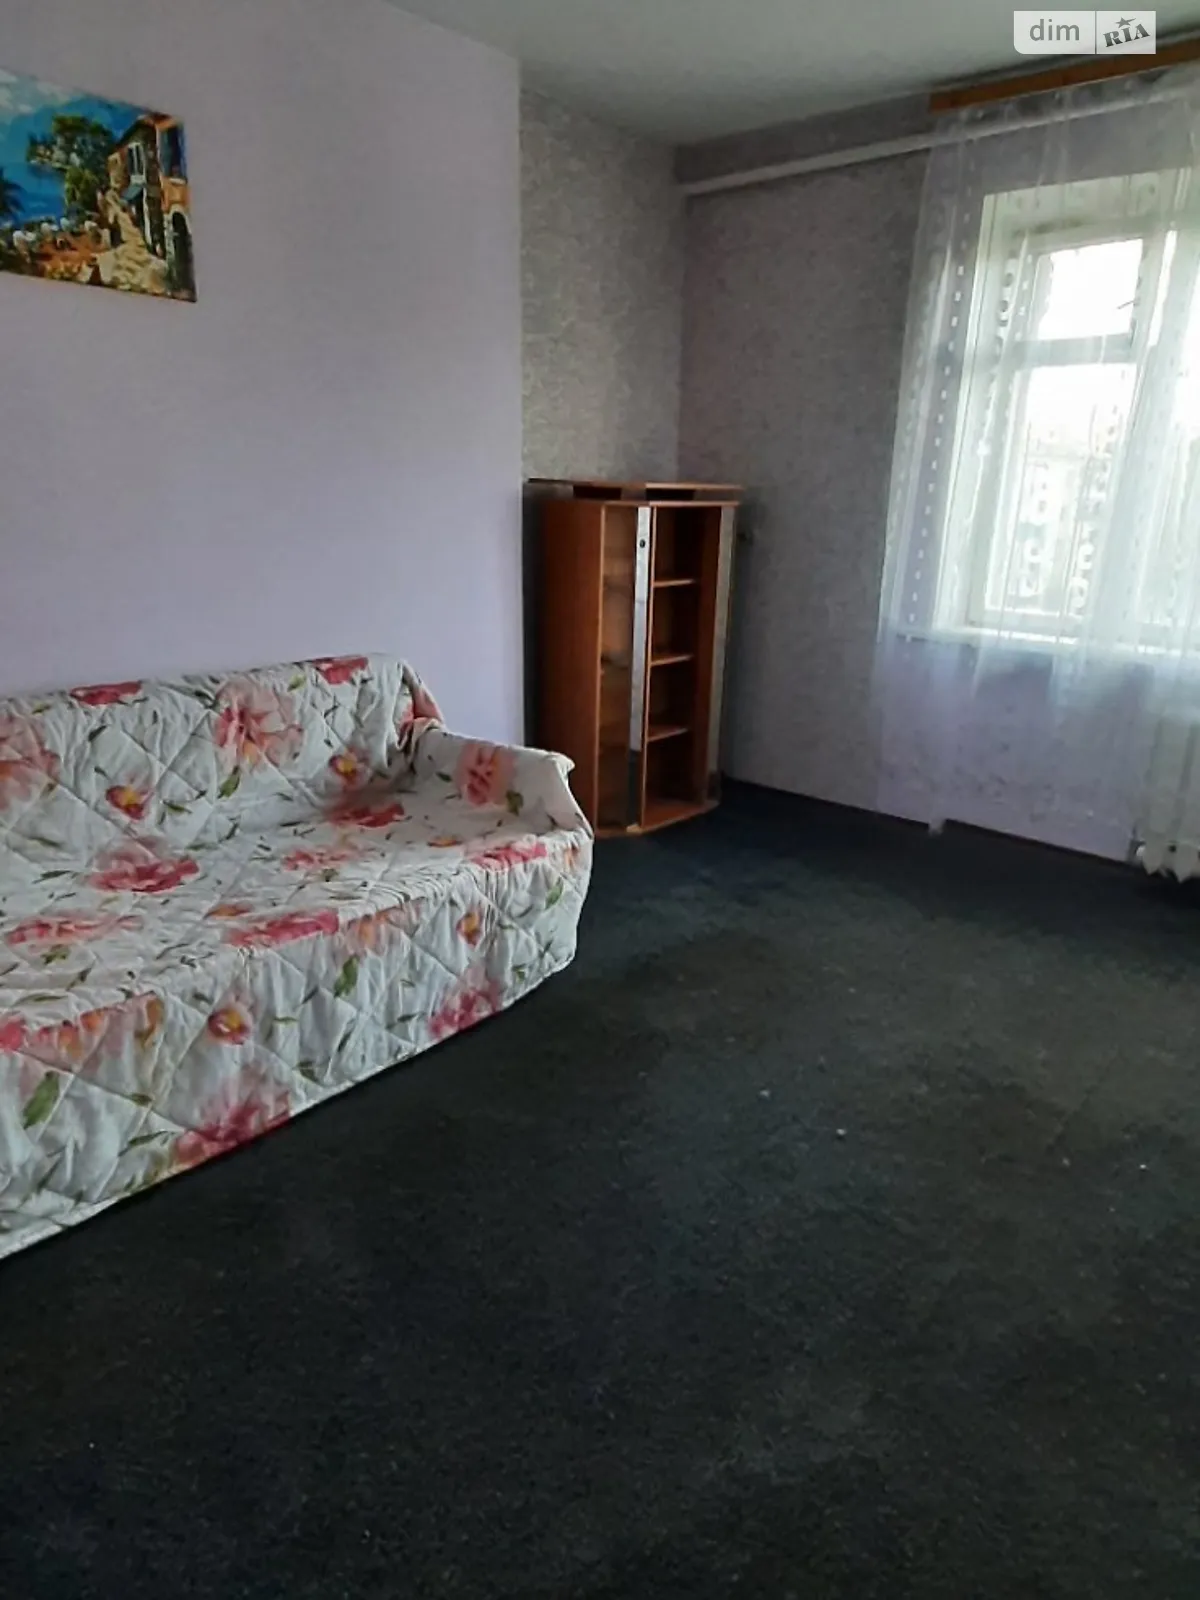 Продается комната 27 кв. м в Виннице, цена: 12000 $ - фото 1